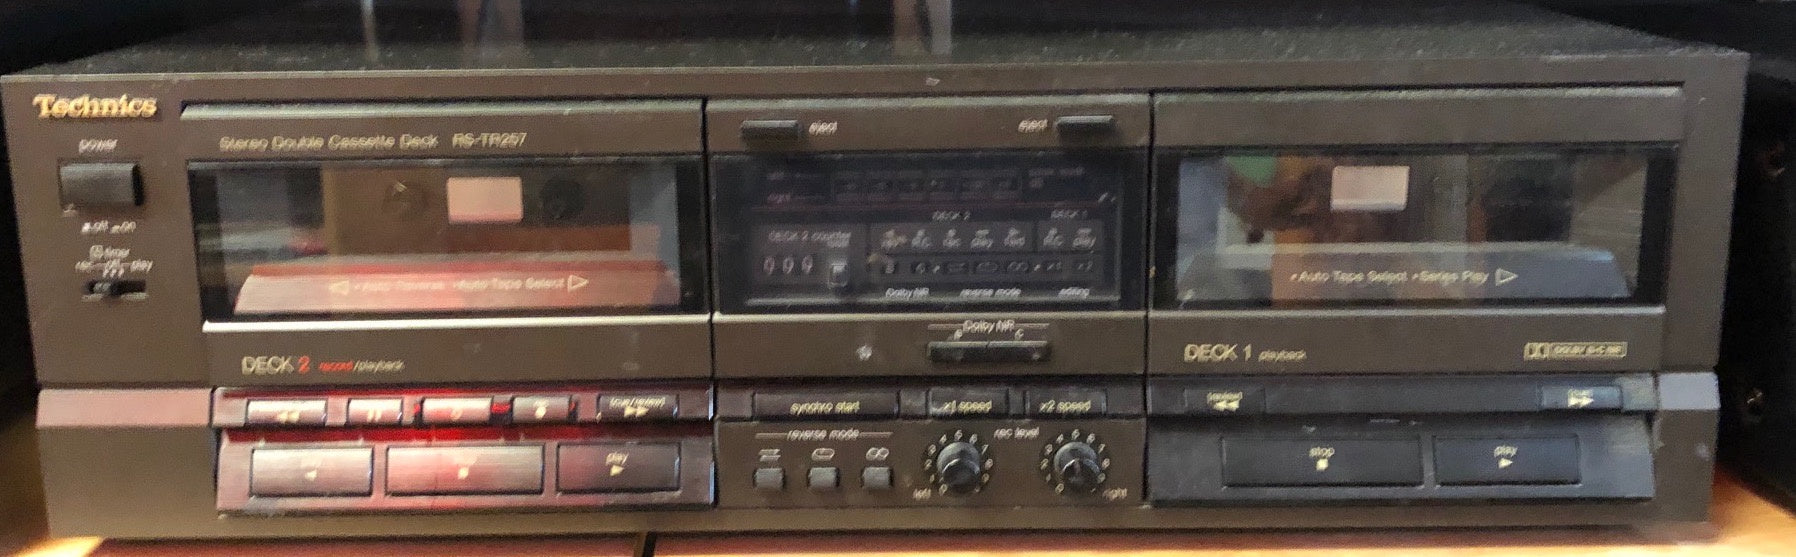 Technics RS-TR257 Stereo Dual Cassette Deck